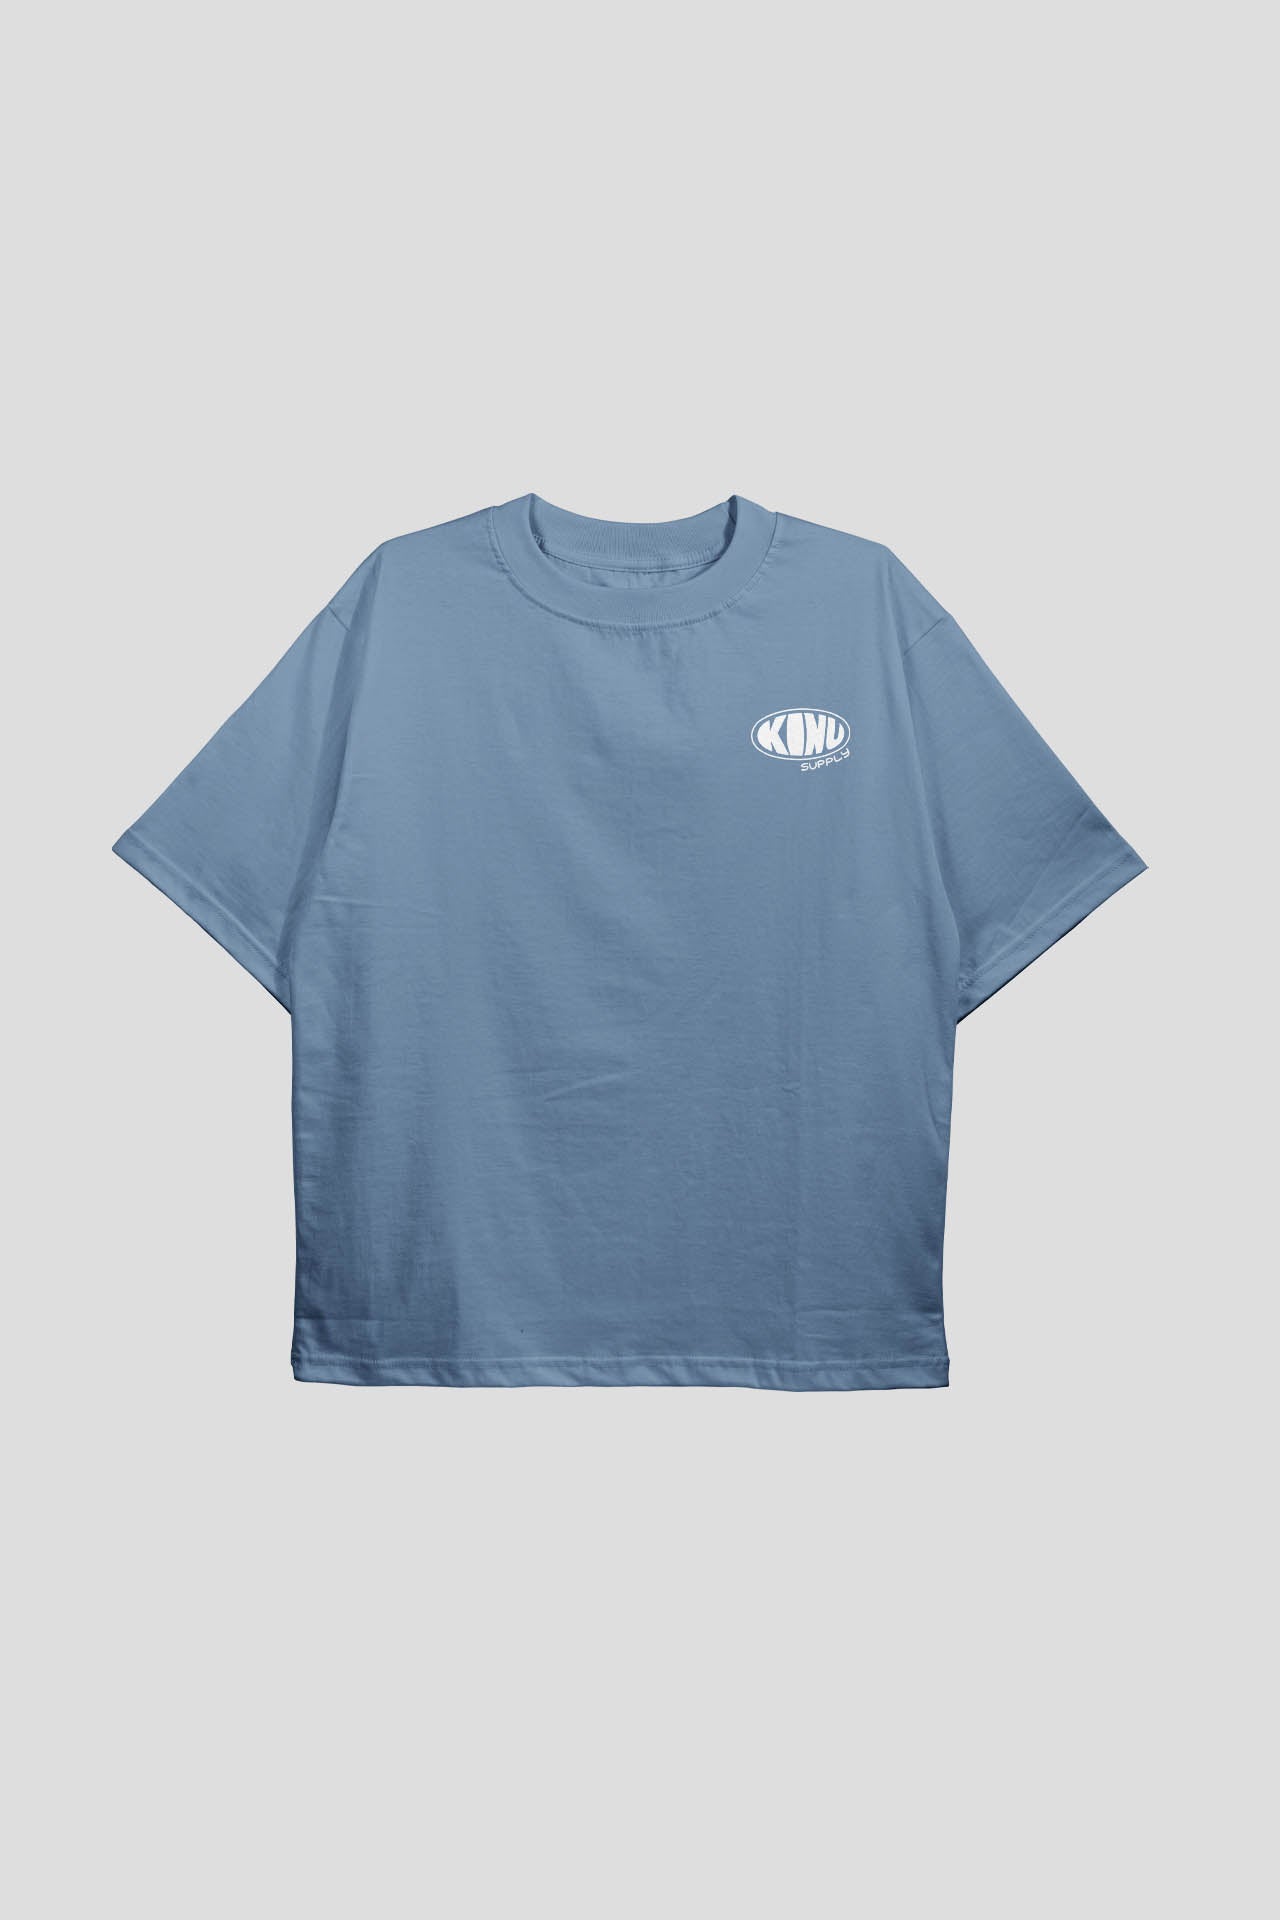 Lapdog Crew T-shirt Grey Blue